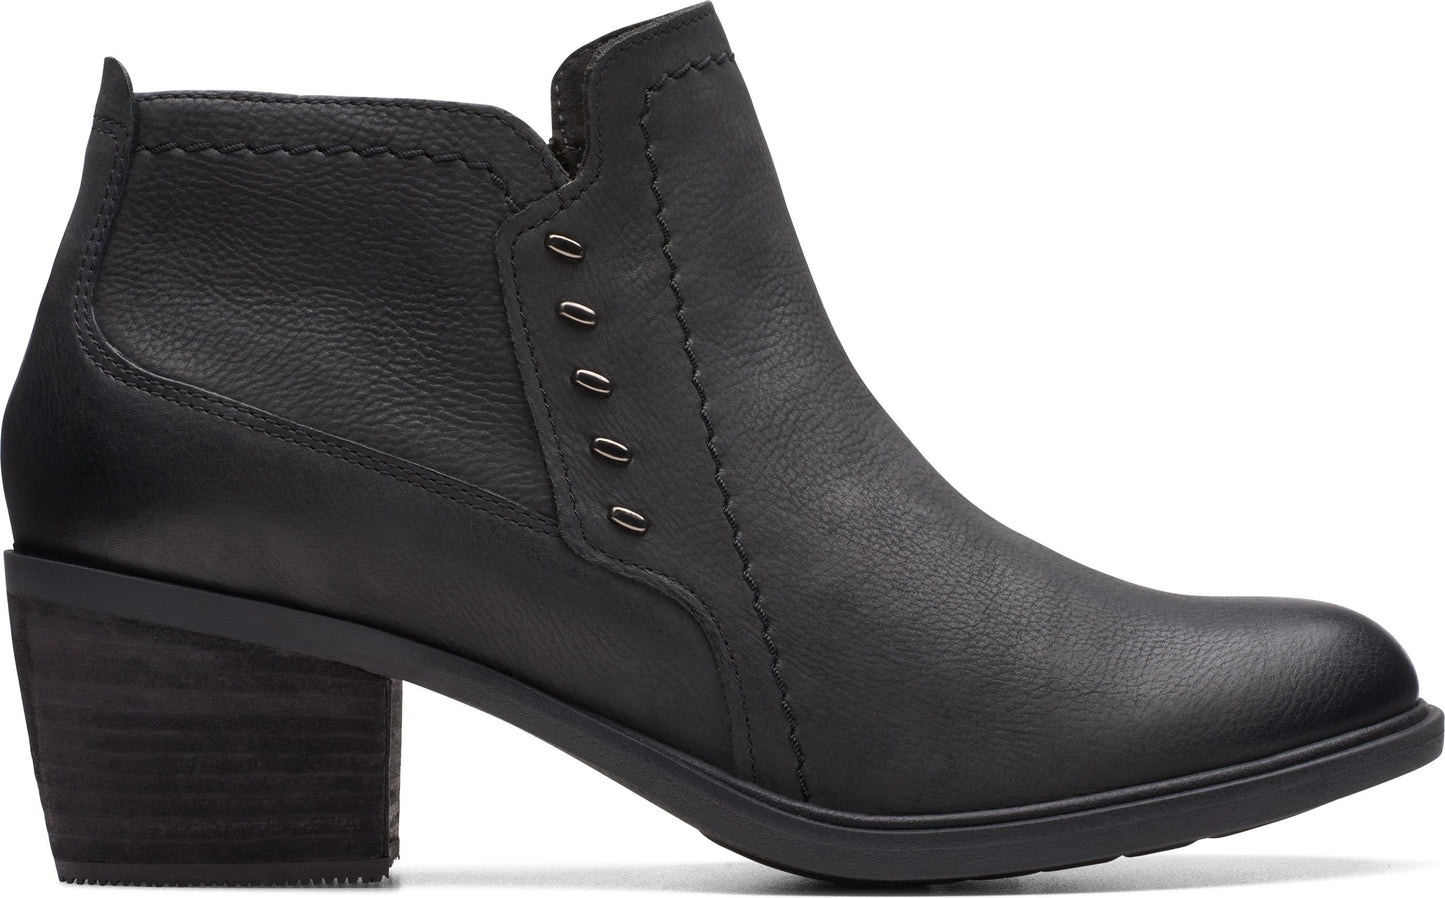 Clarks Boots Neva Lo Black Leather